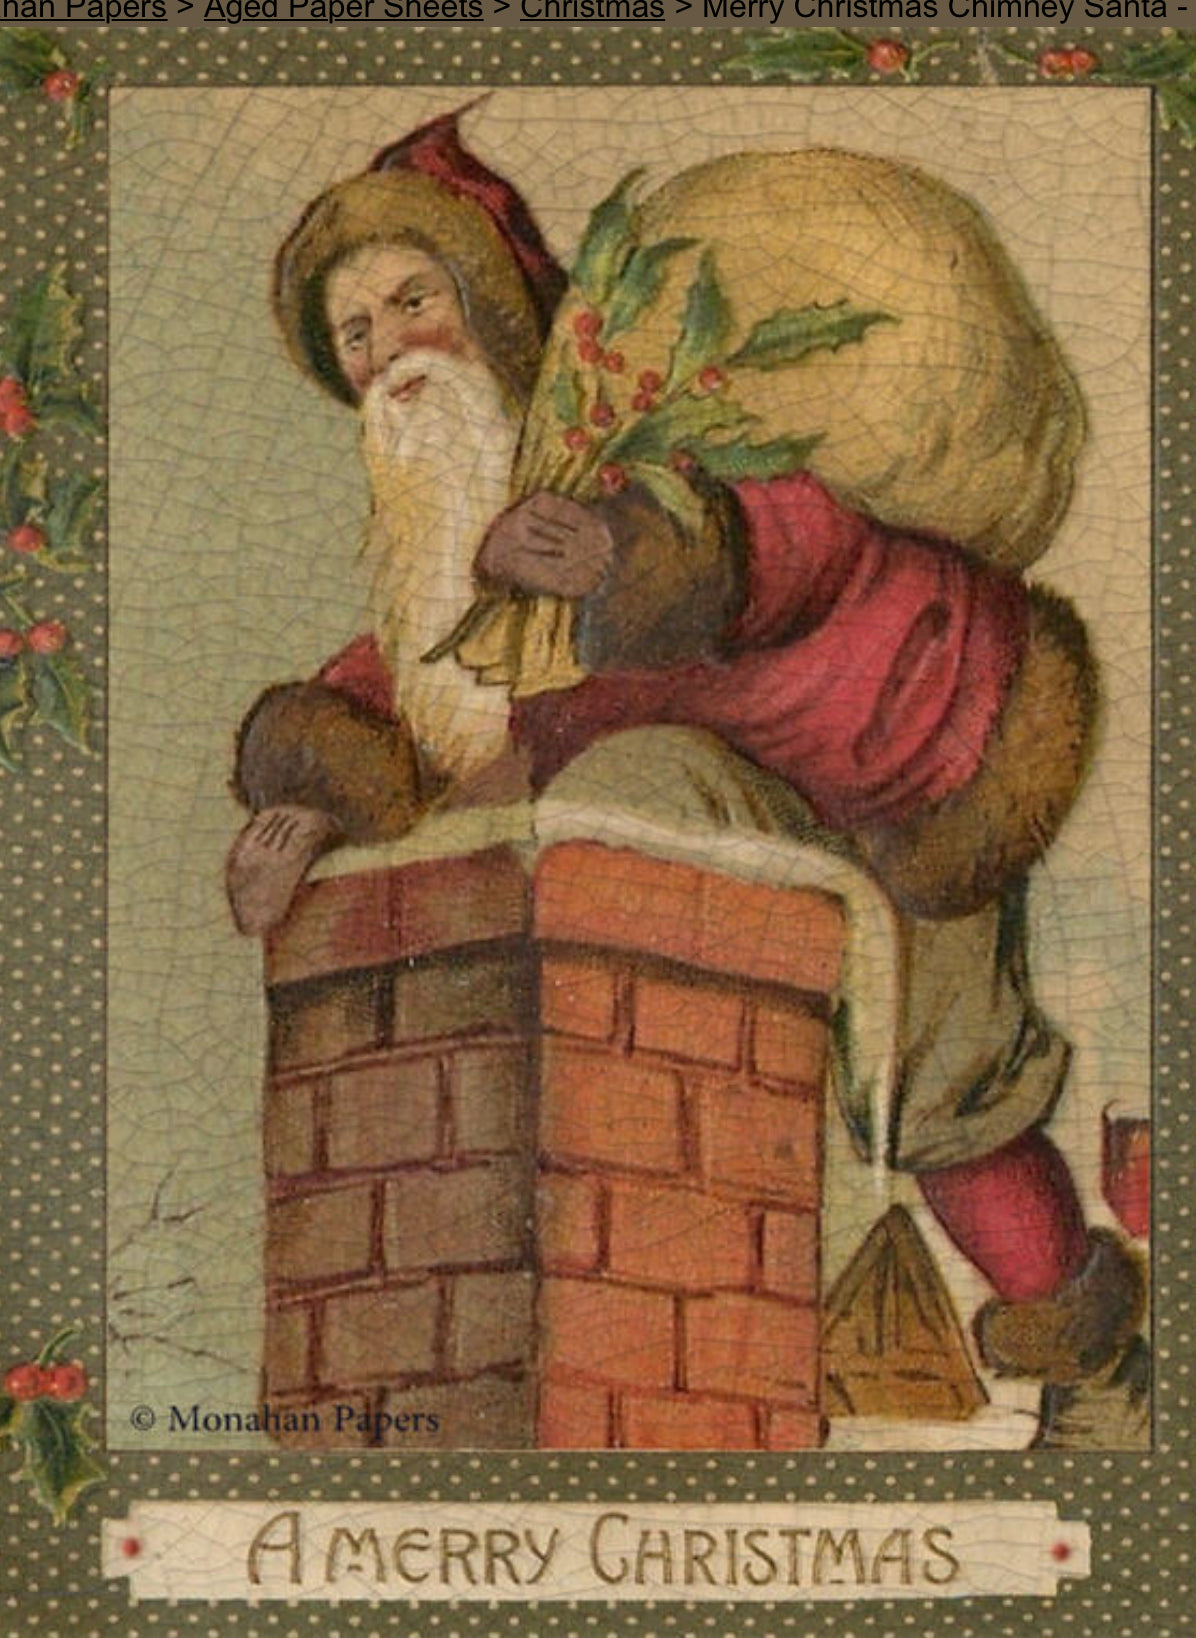 Merry Christmas Chimney Santa C252